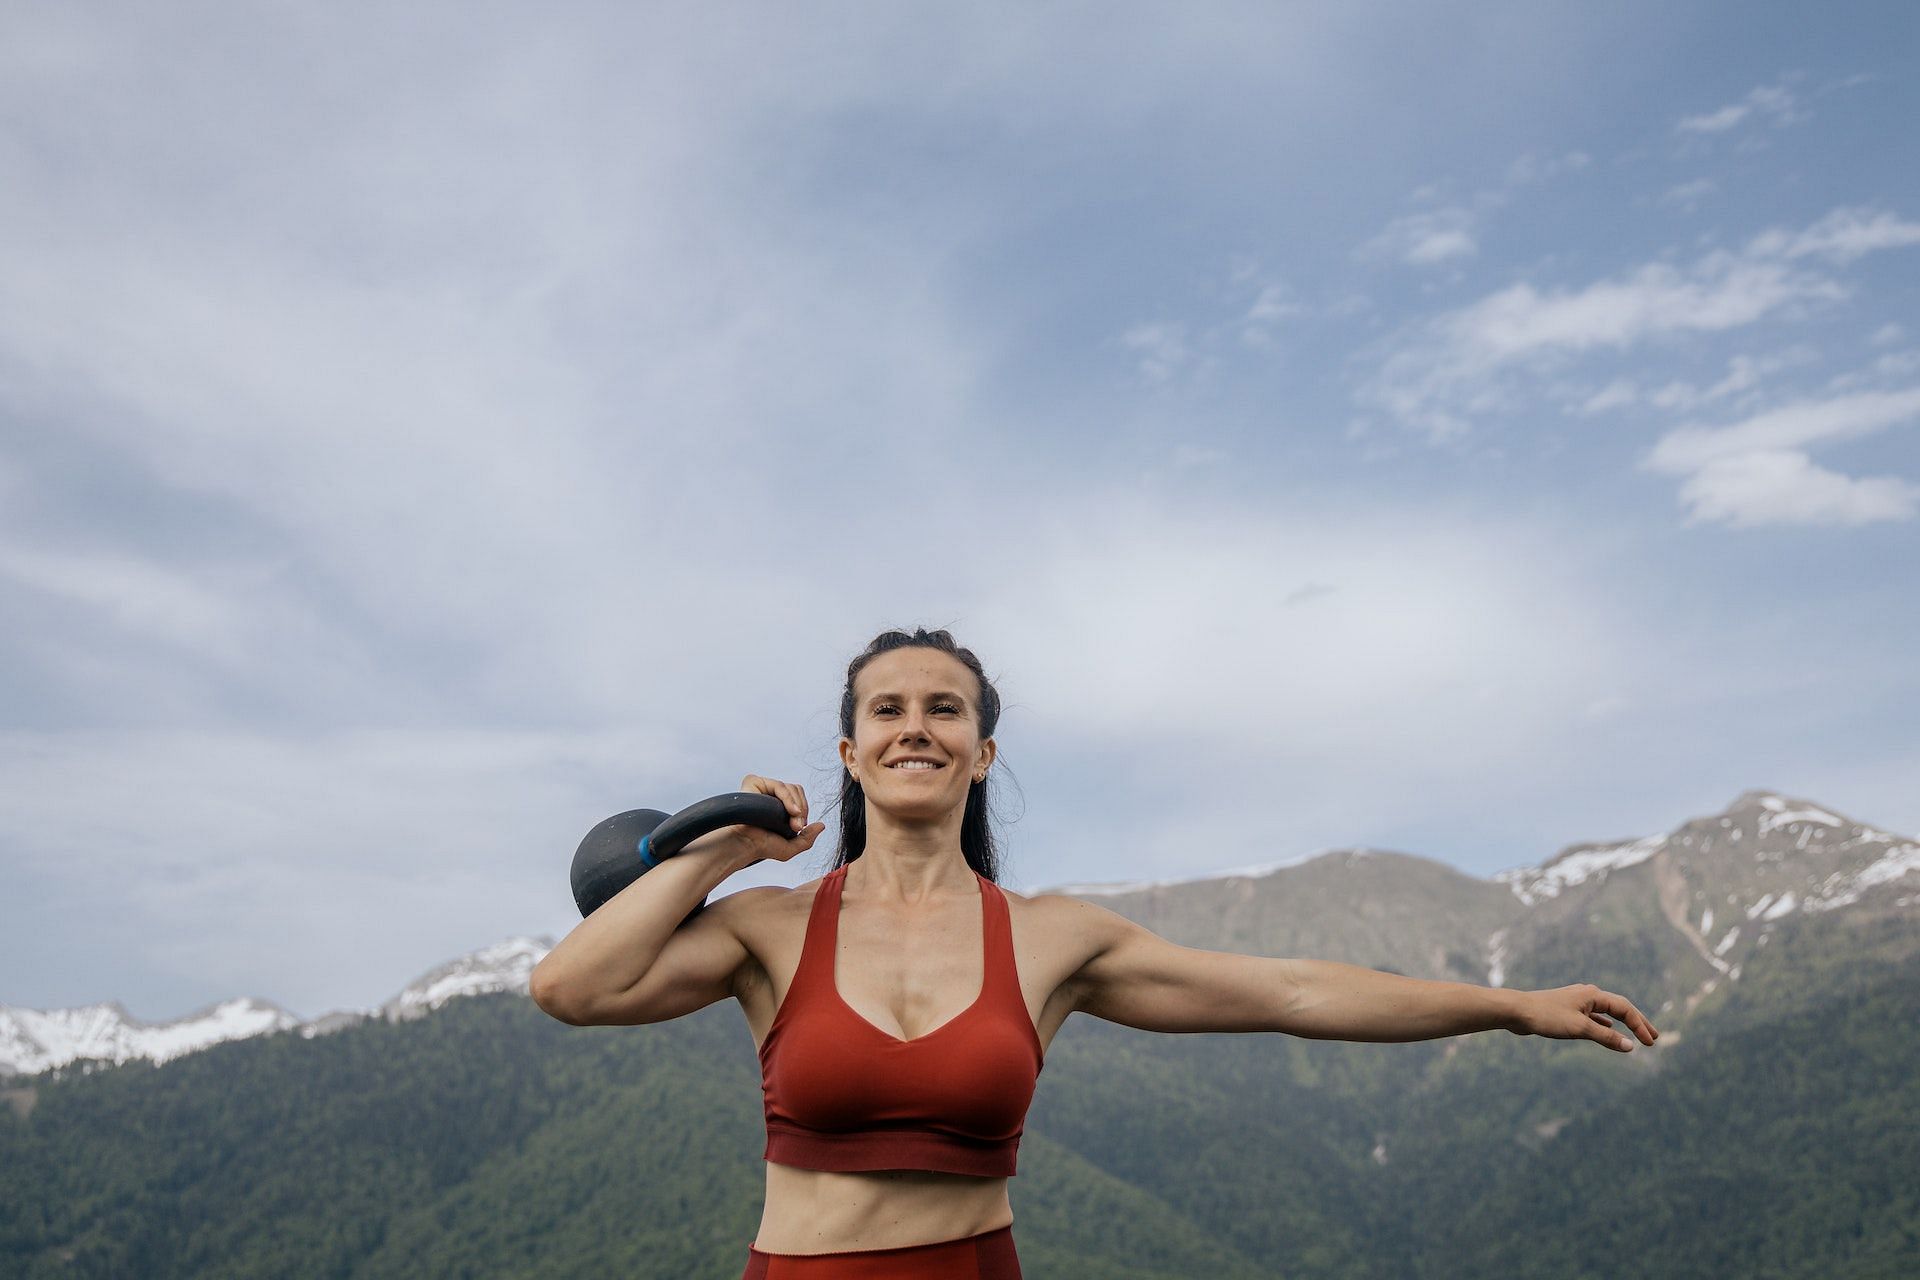 Full body kettlebell workouts include shoulder press. (Photo via Pexels/Anastasia Shuraeva)